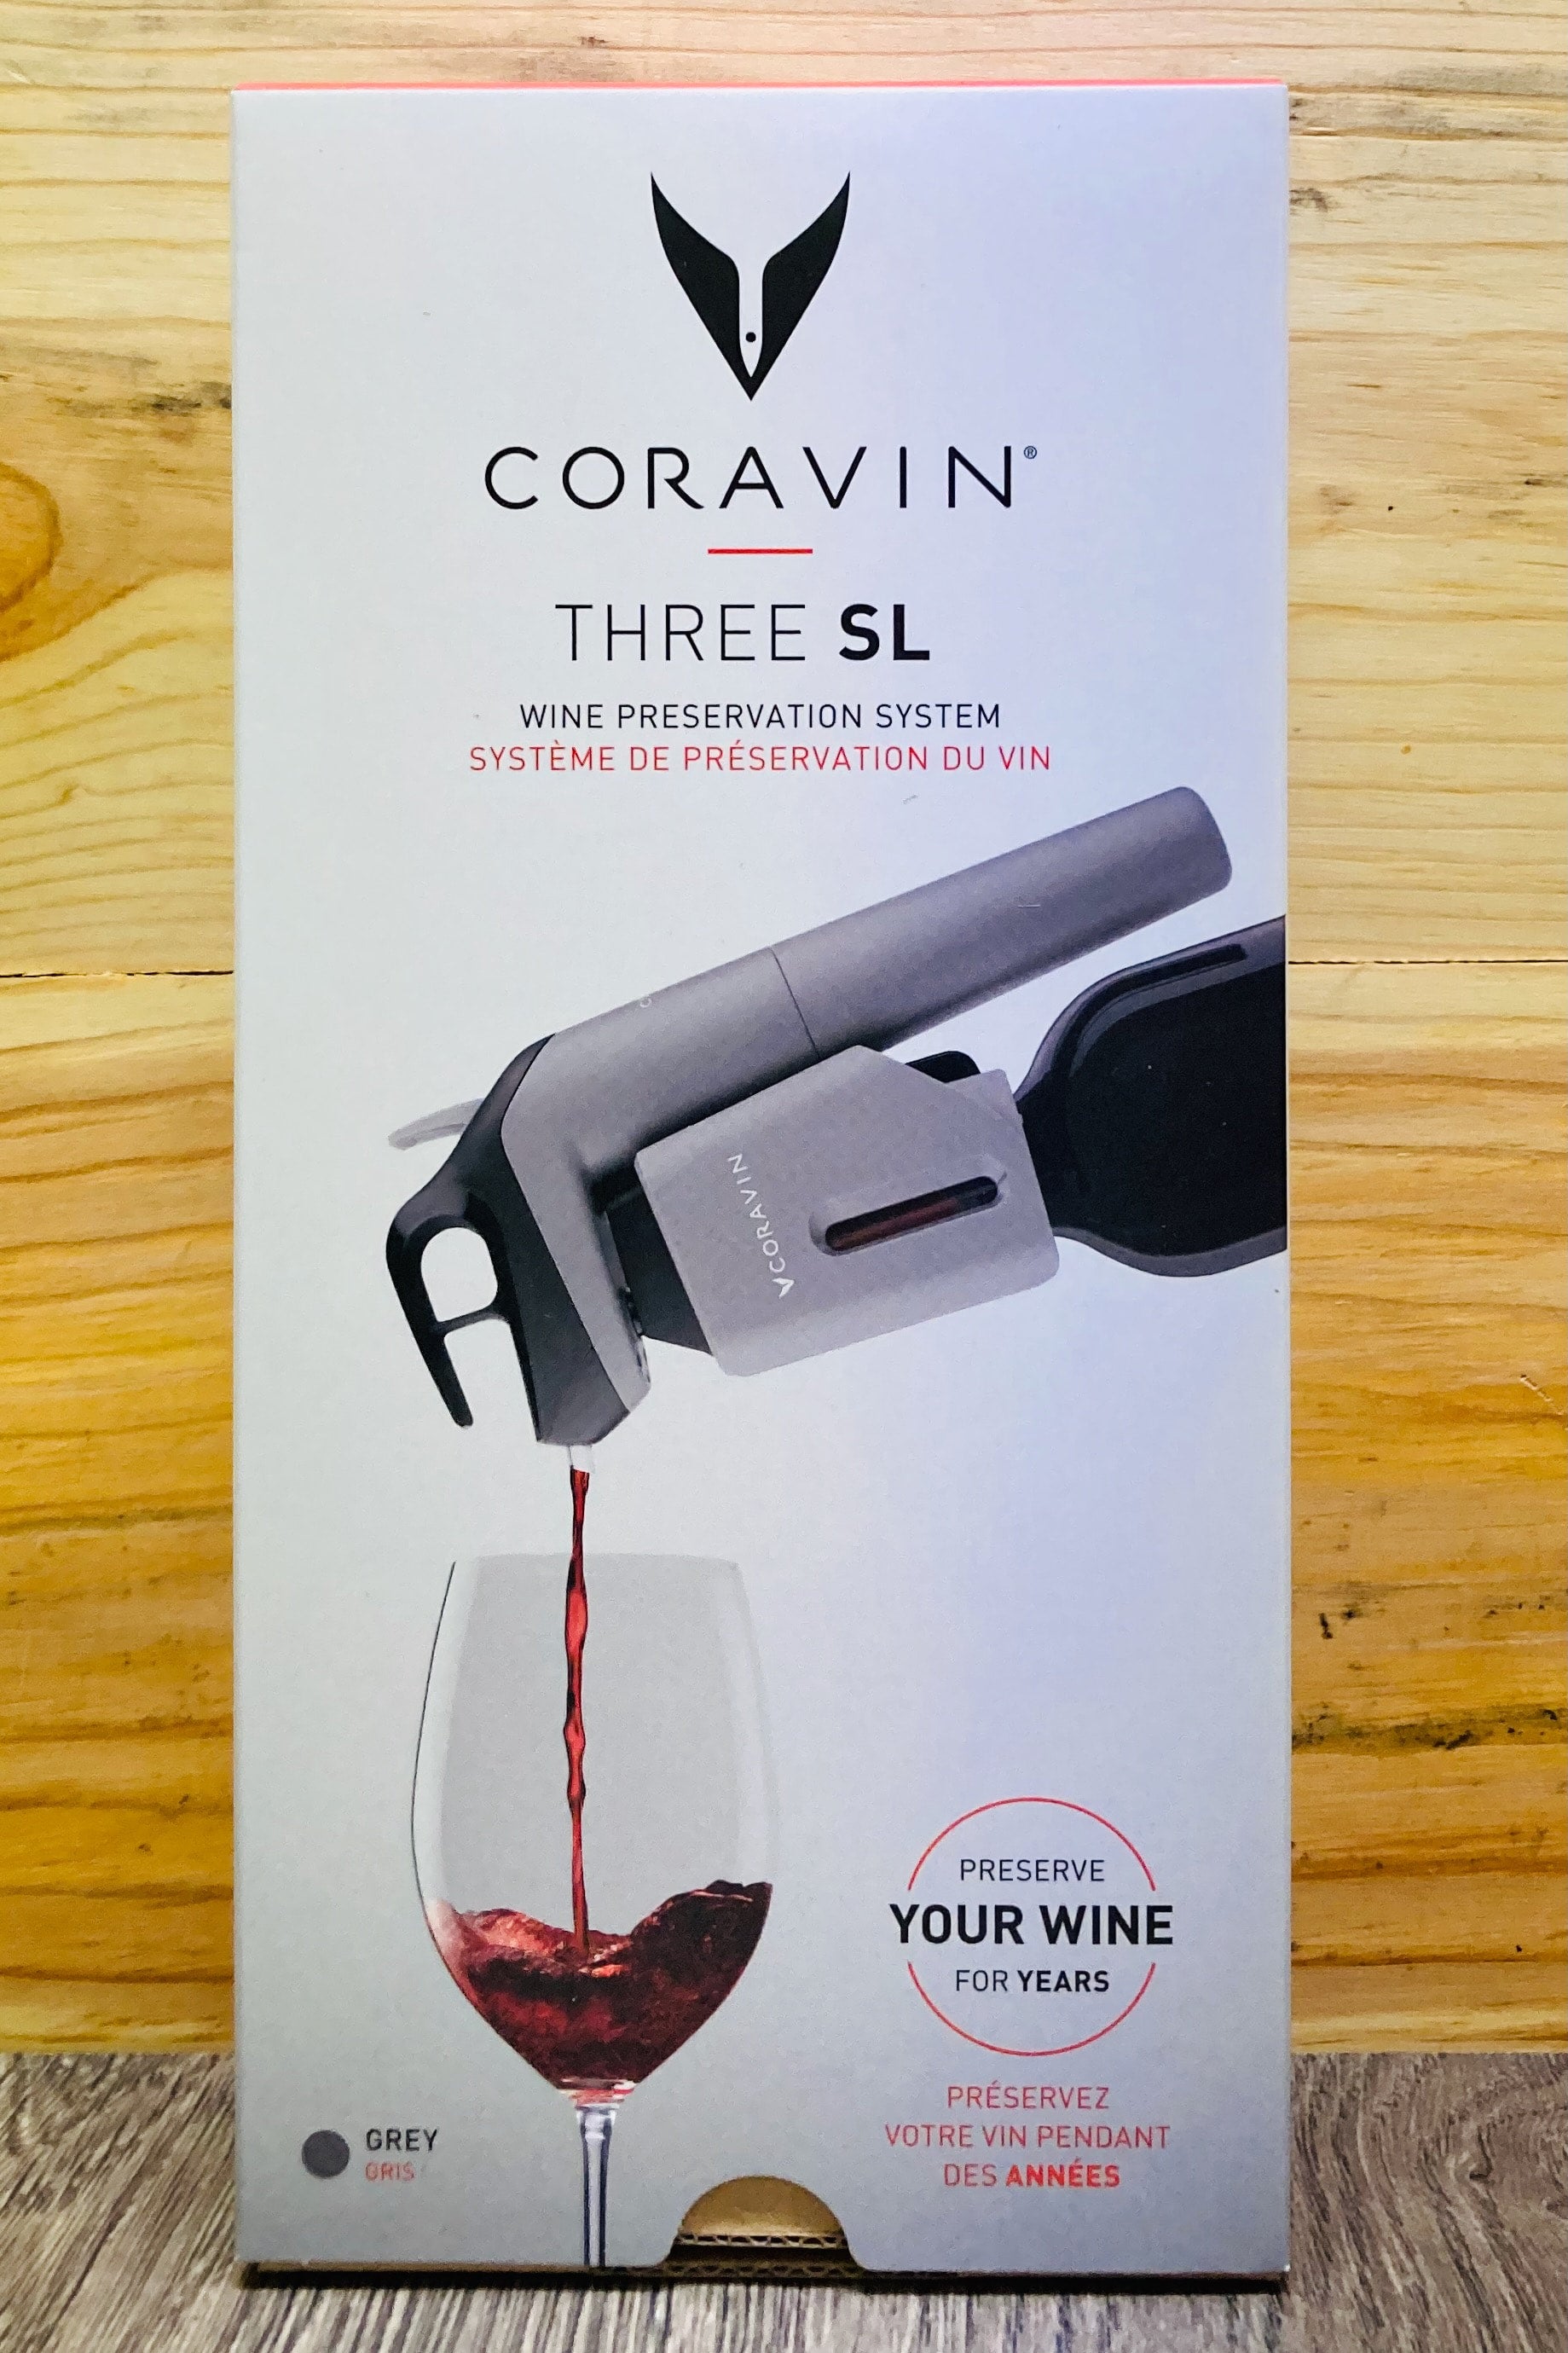 Coravin, Wine Preservation System Three SL